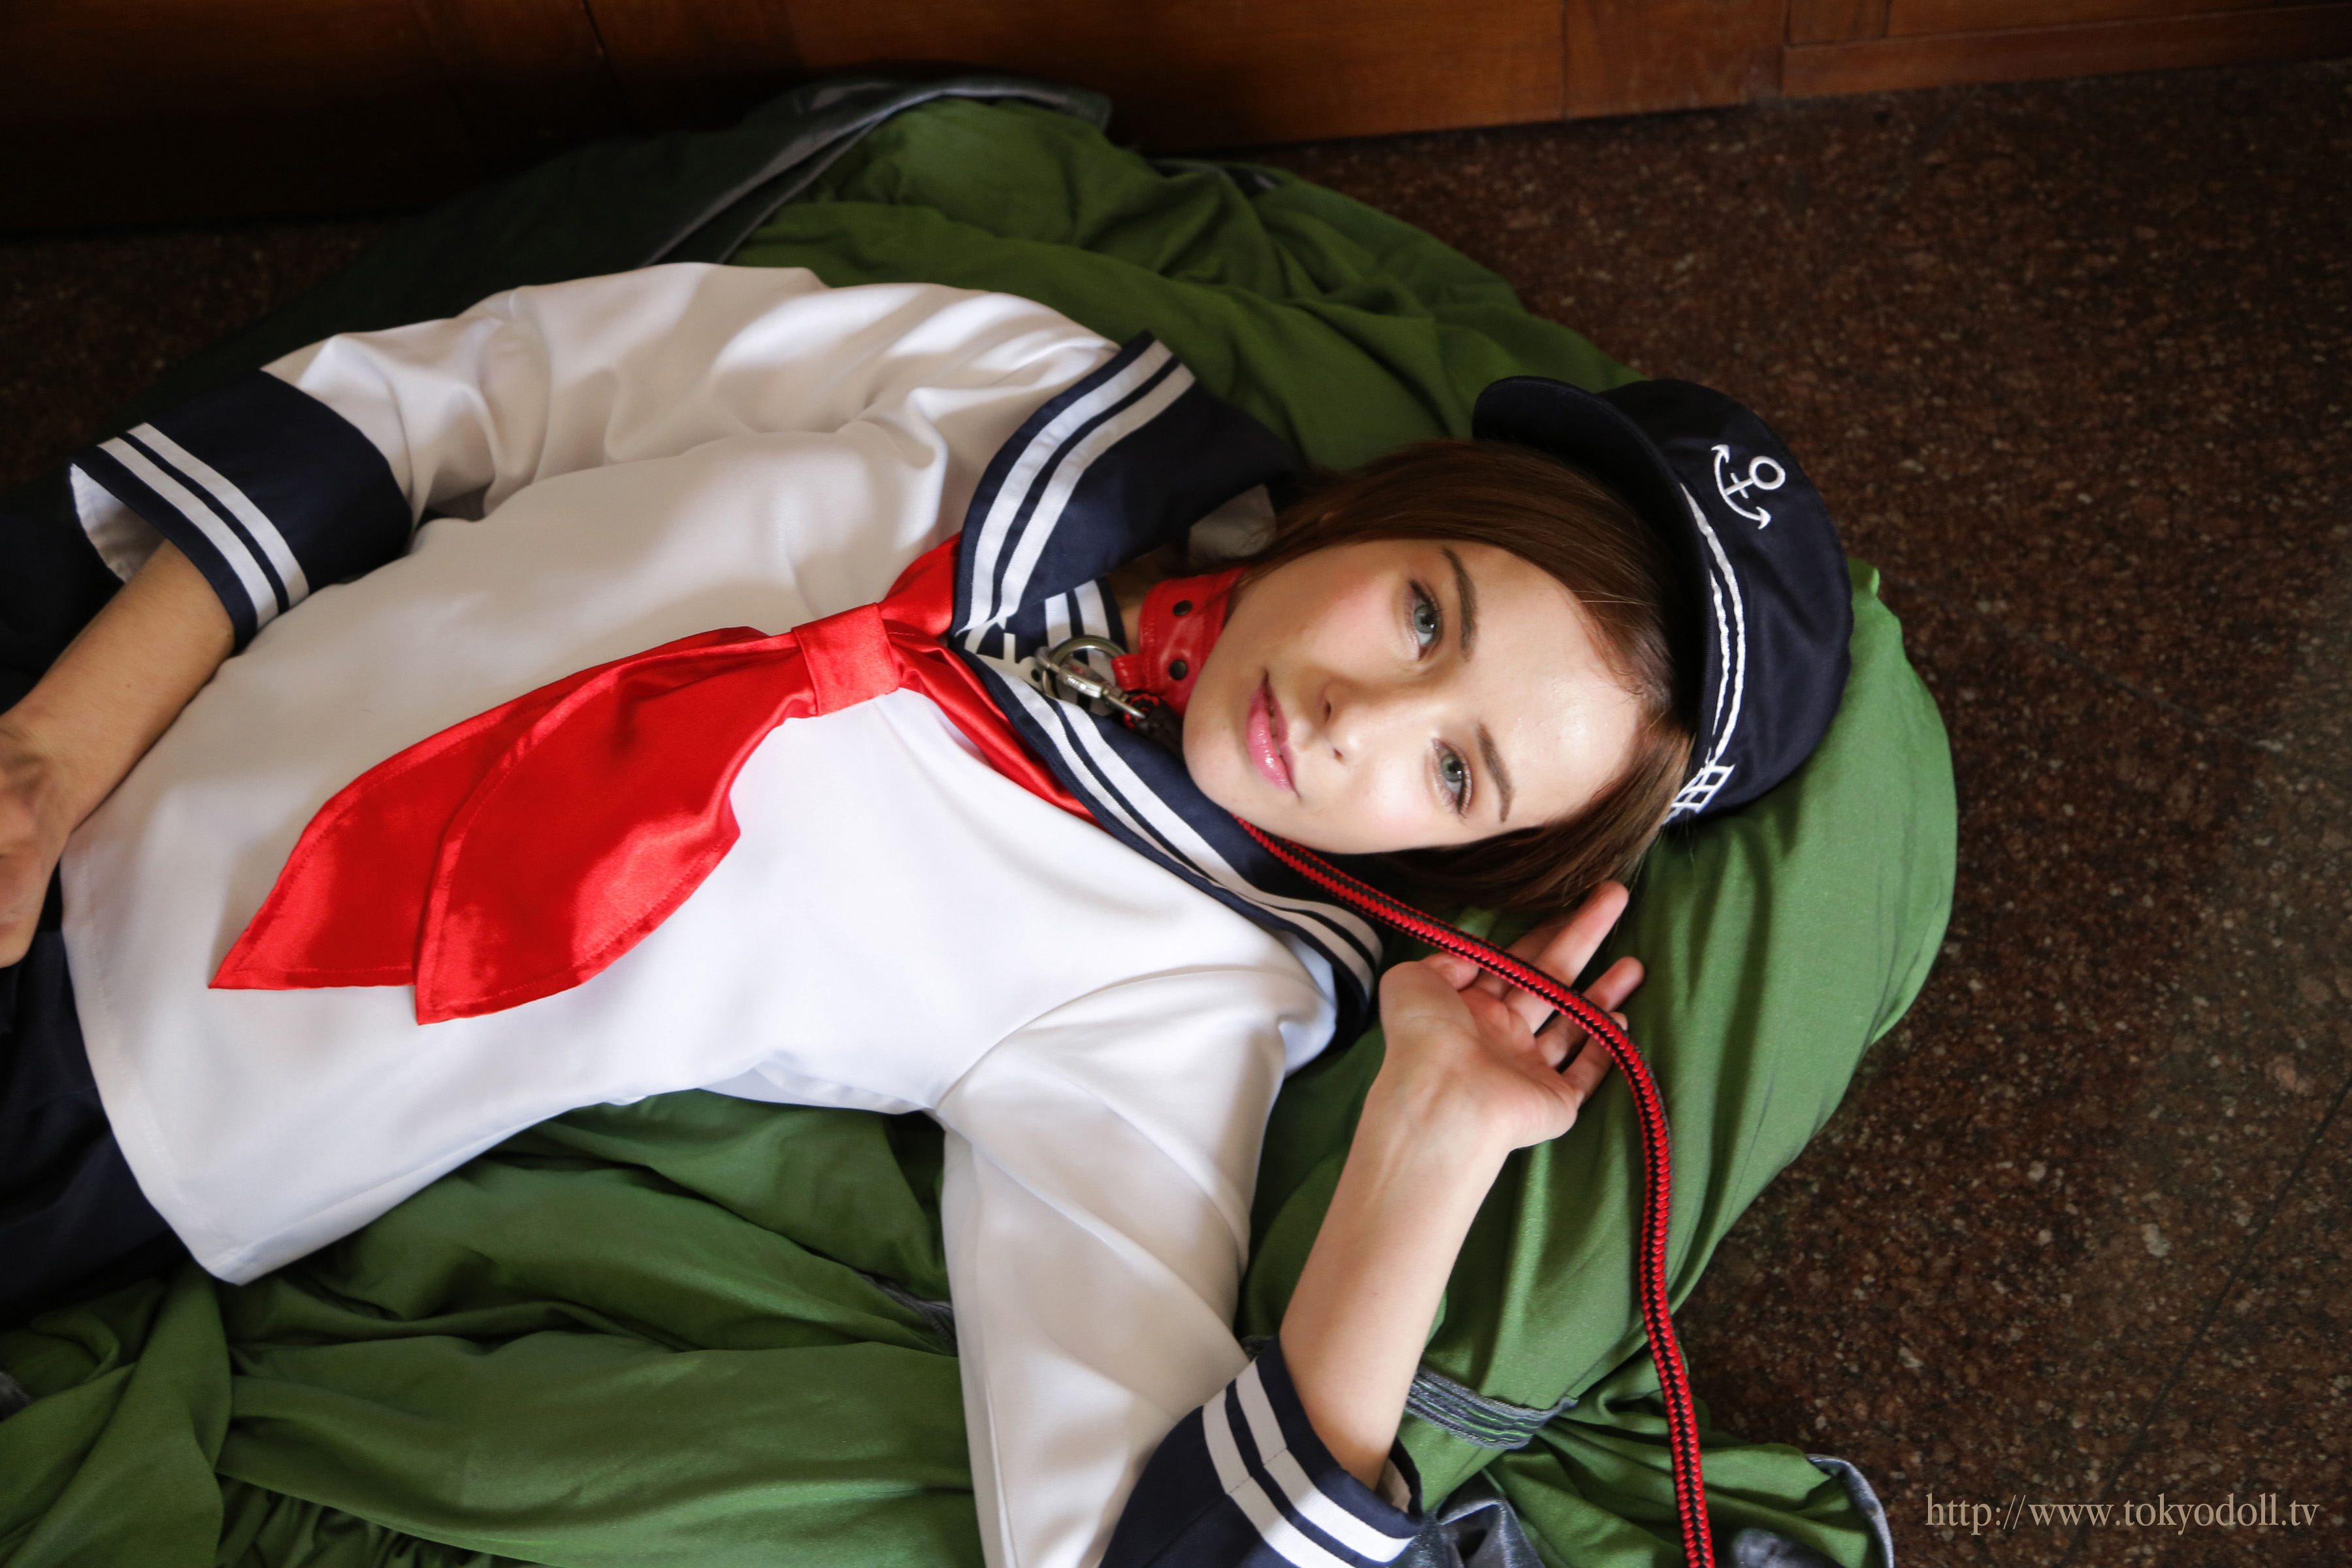 Glafira E Model Blue Eyes On The Floor Lying Down Women TokyoDoll Sailor Uniform Collar